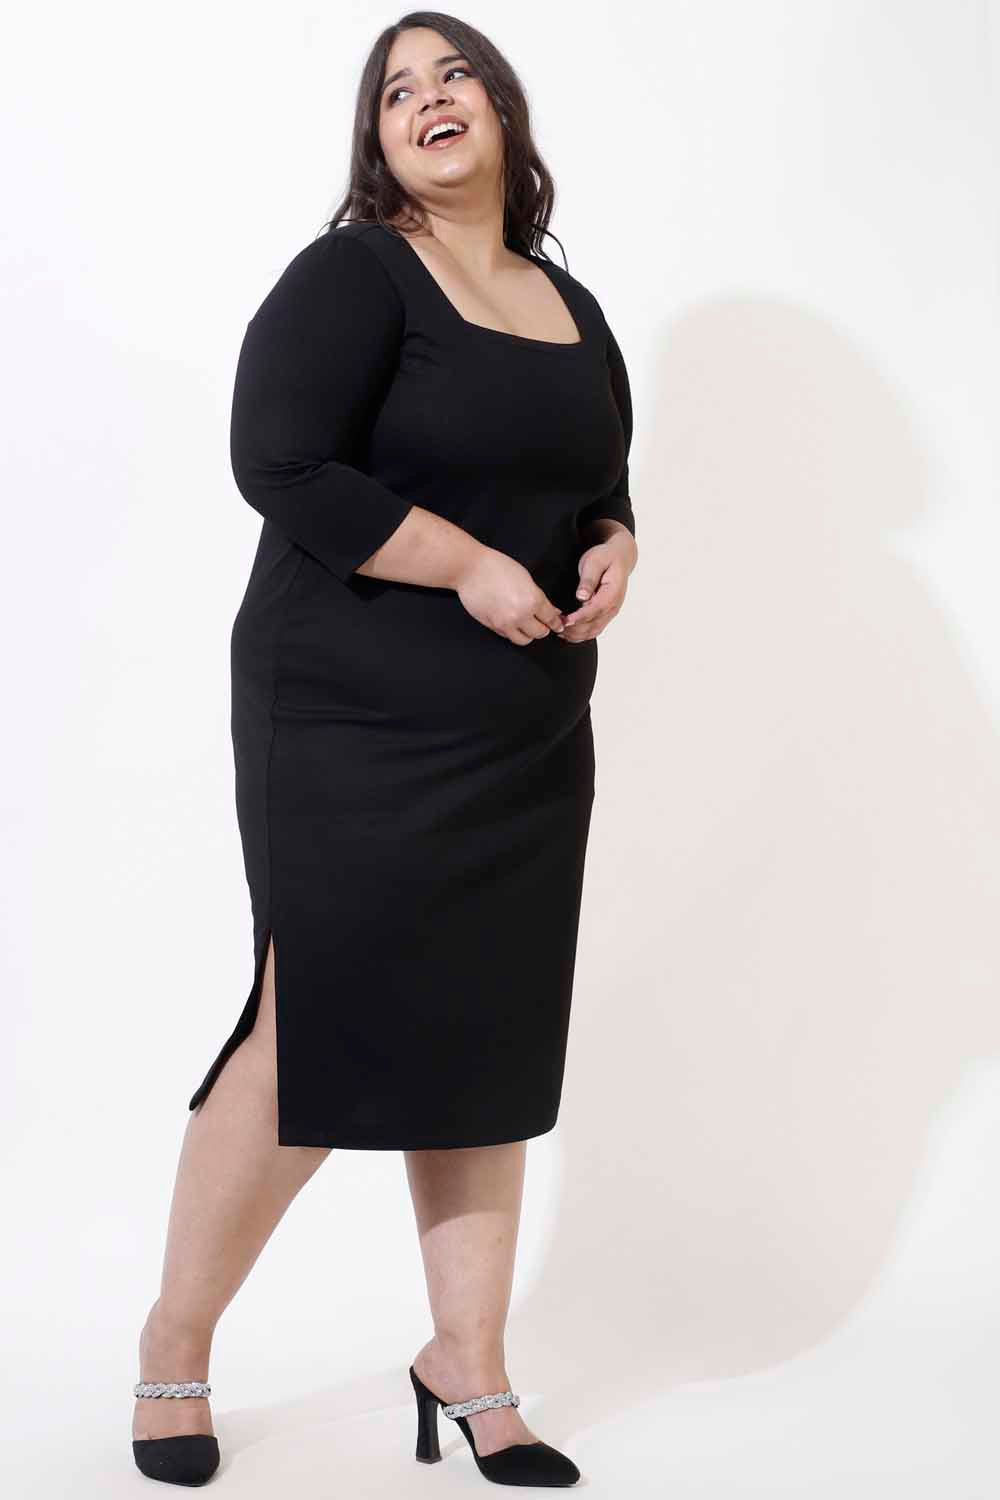 Buy Plus Size Black Bodycon Dress